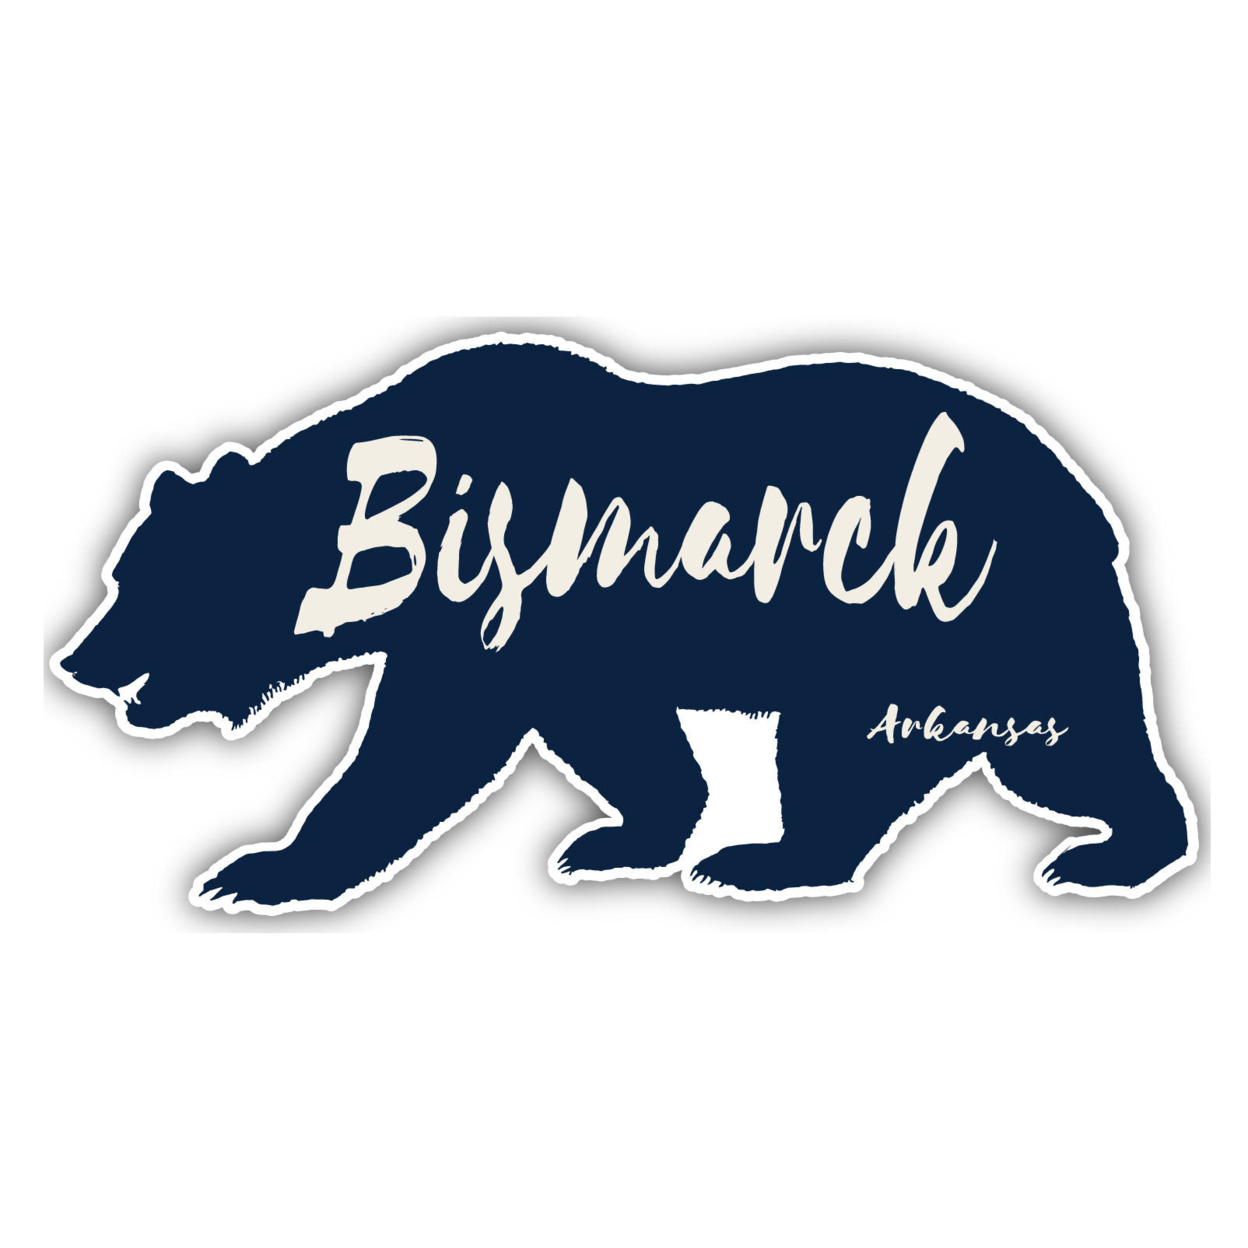 Bismarck Arkansas Souvenir Decorative Stickers (Choose Theme And Size) - 4-Pack, 12-Inch, Bear